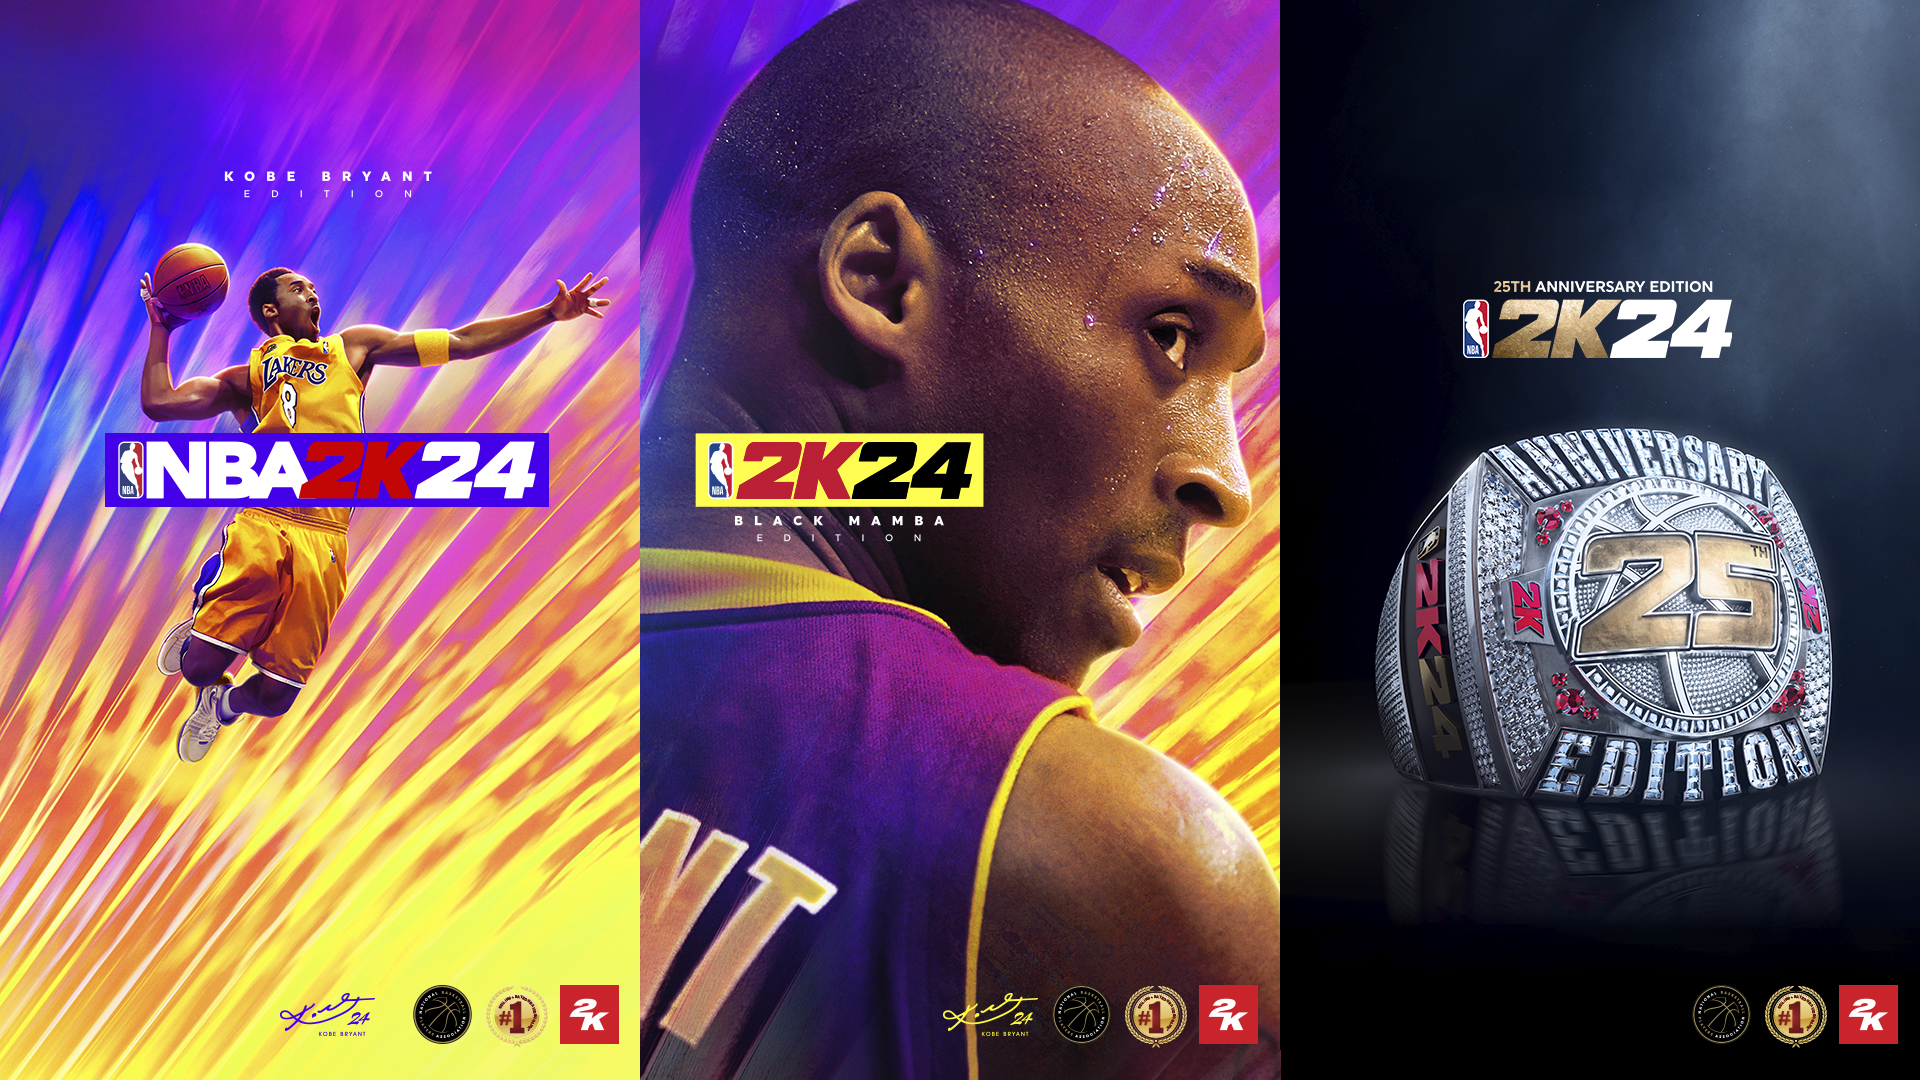 【PS5】NBA 2K24 ブラック・マンバ エディション【新品未開封】